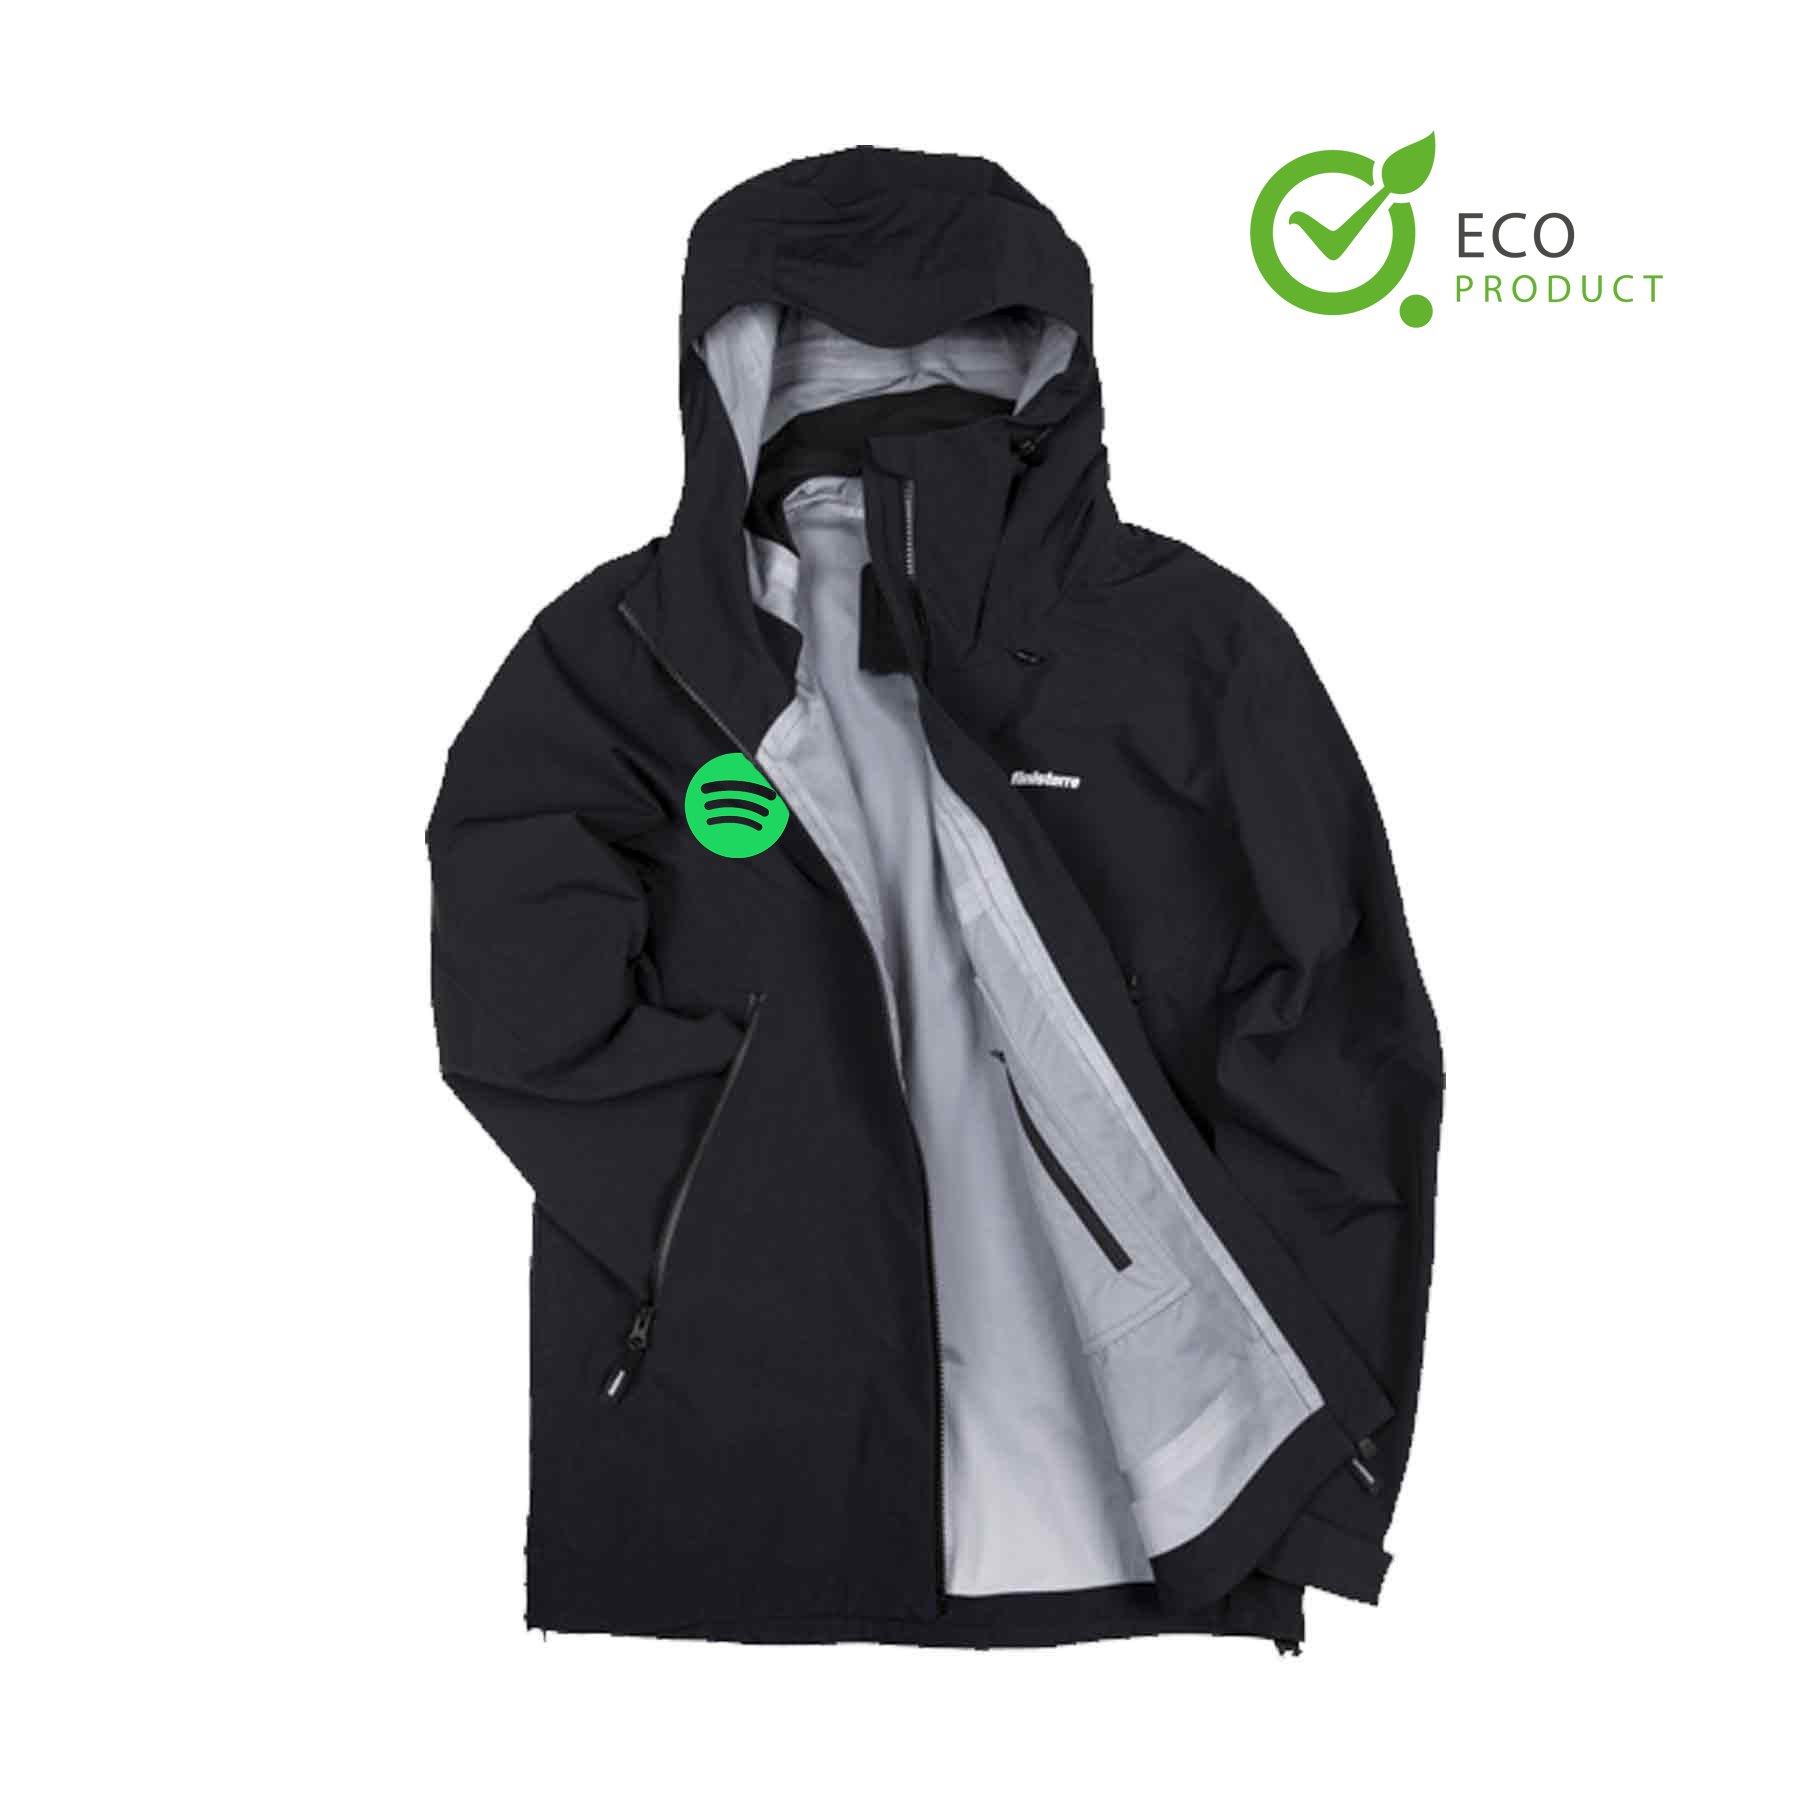 Co Branded Finisterre Men’s Storm Bird Waterproof Jacket